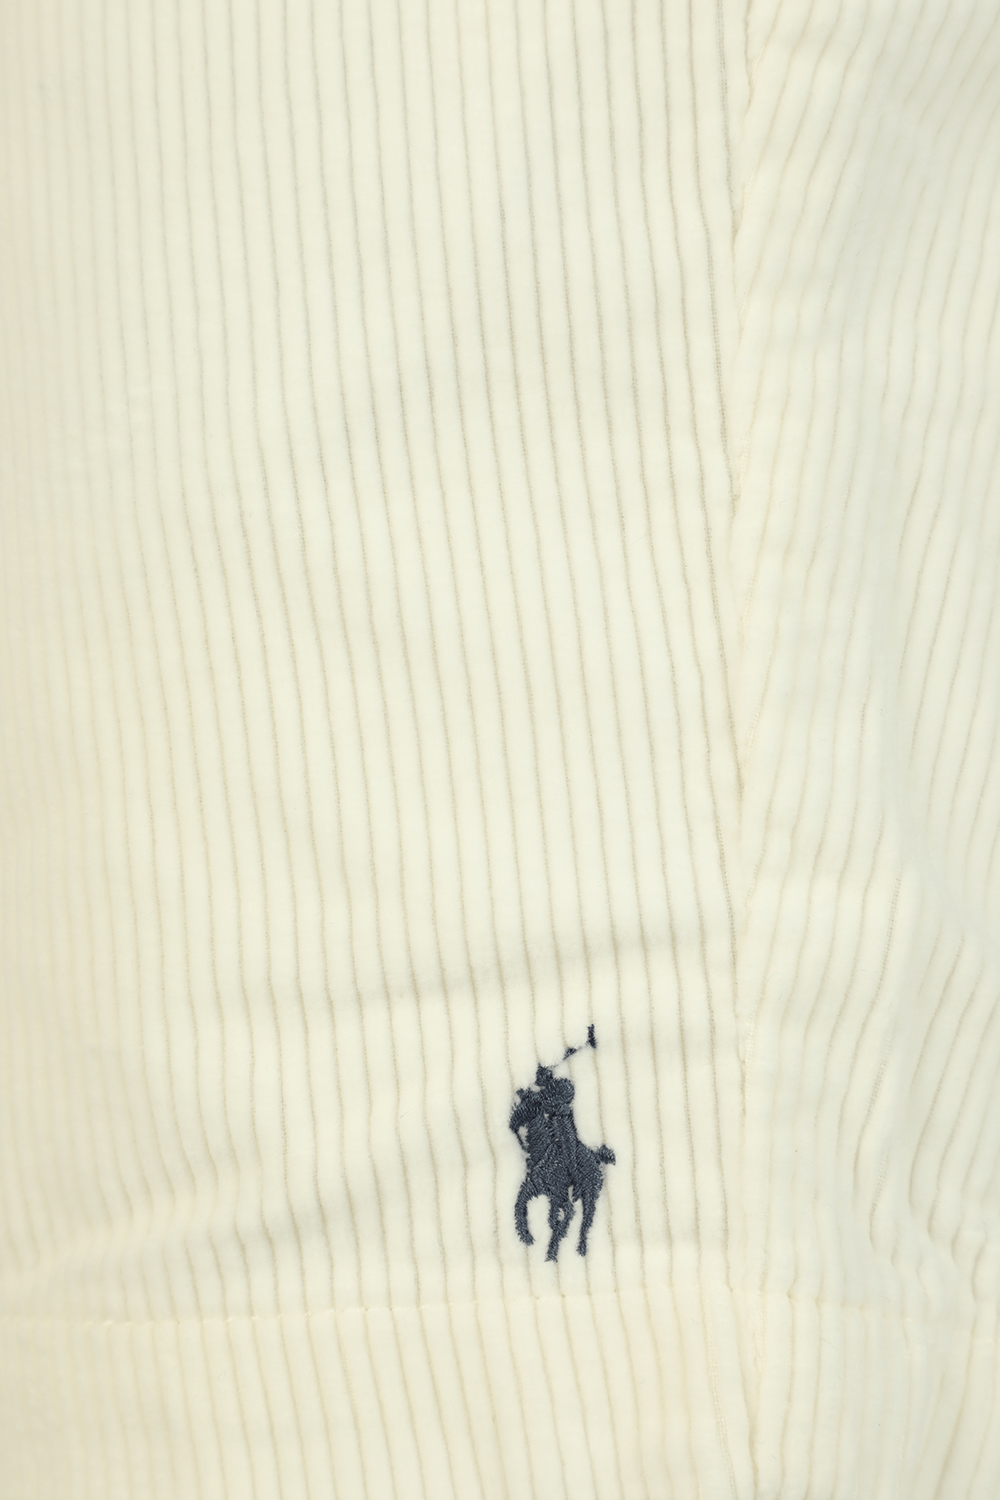 Drawstring Corduroy Shorts in White POLO RALPH LAUREN